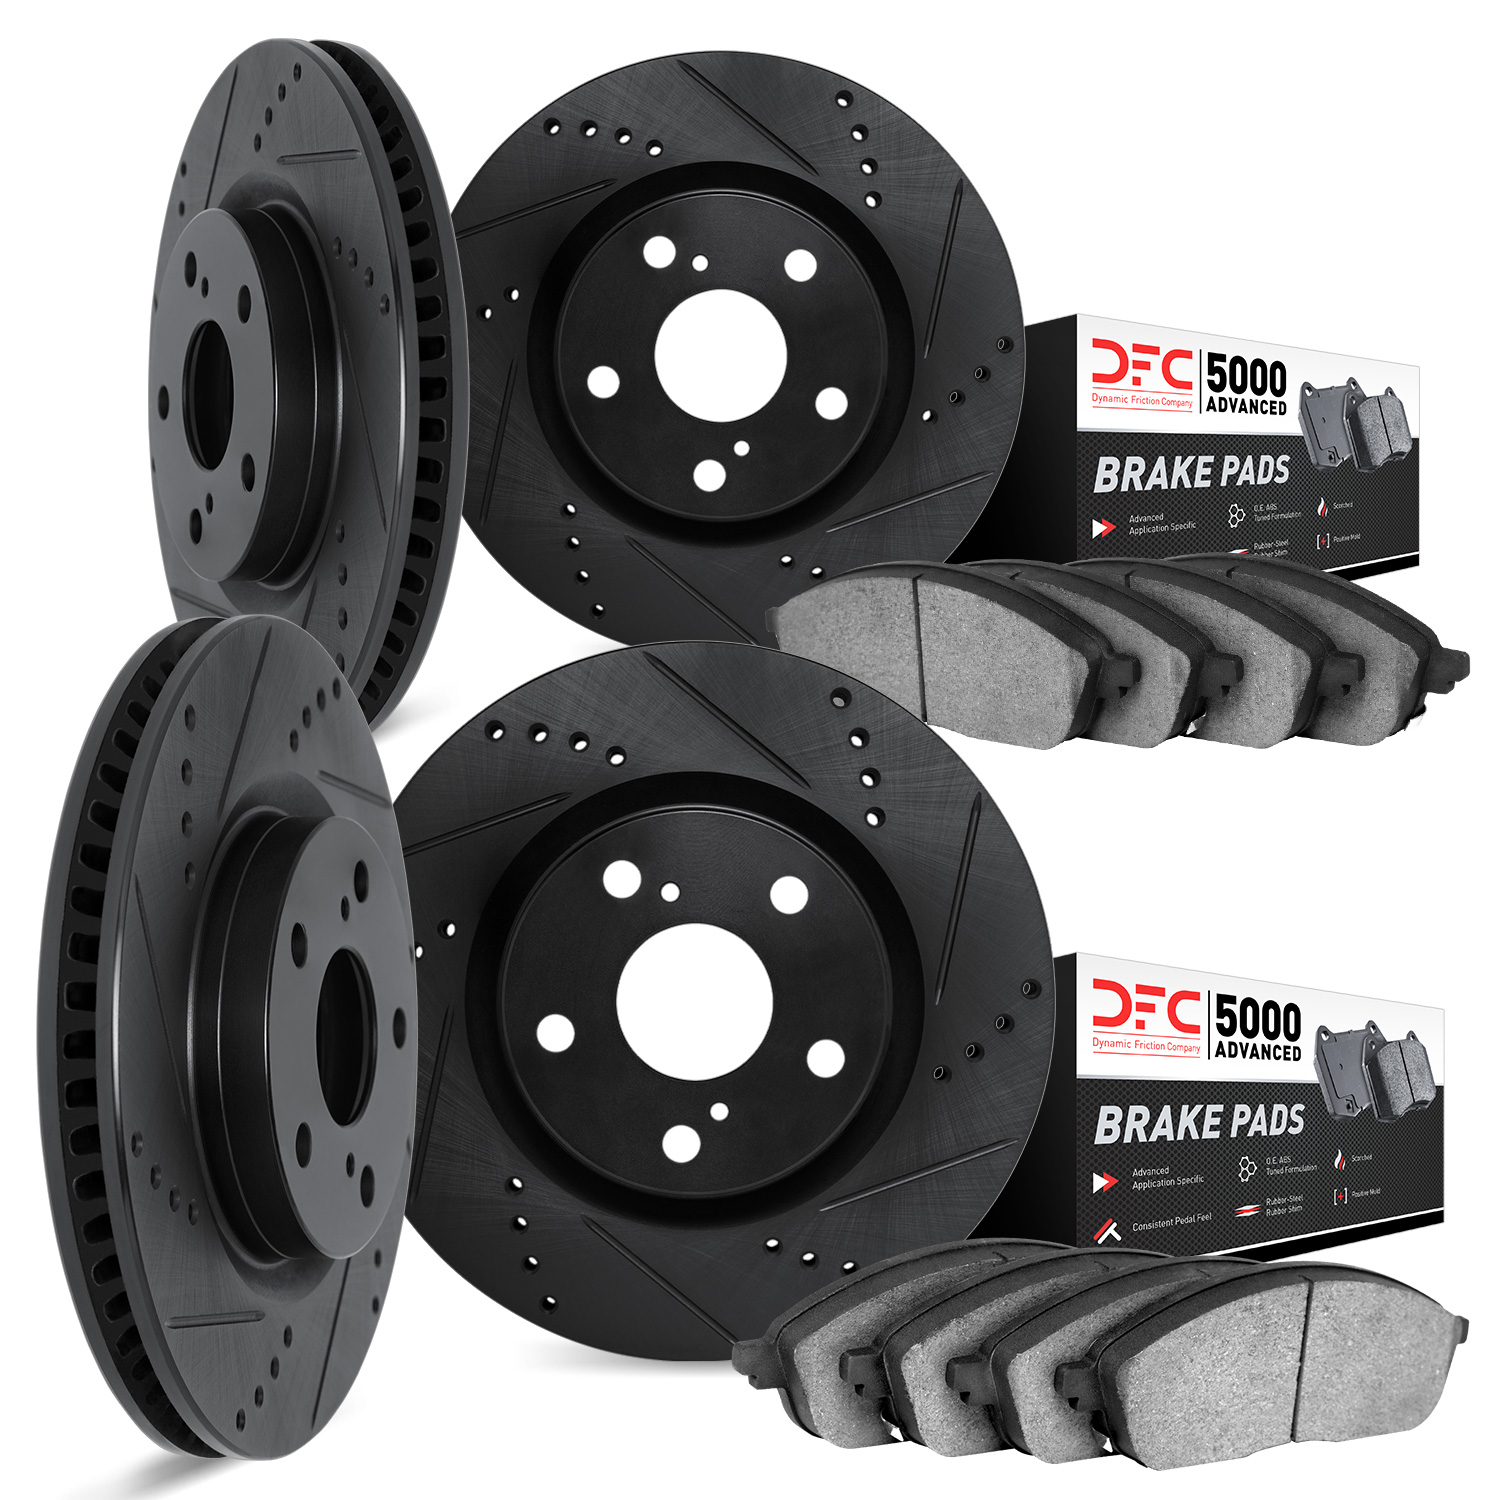 8504-40237 Drilled/Slotted Brake Rotors w/5000 Advanced Brake Pads Kit [Black], 2006-2018 Mopar, Position: Front and Rear